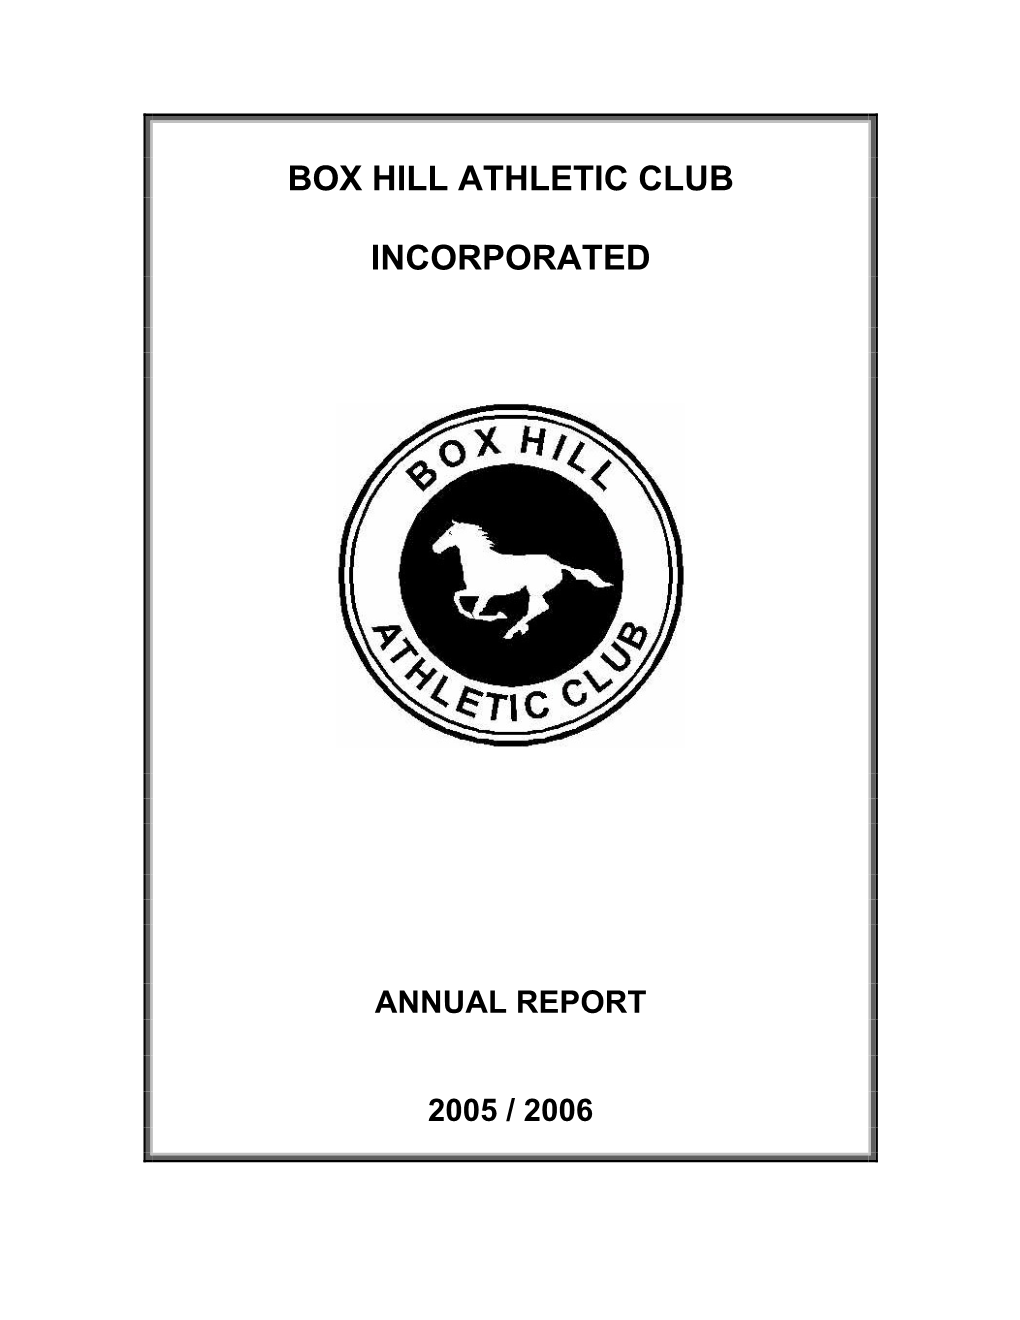 Annual Report 2005 / 2006